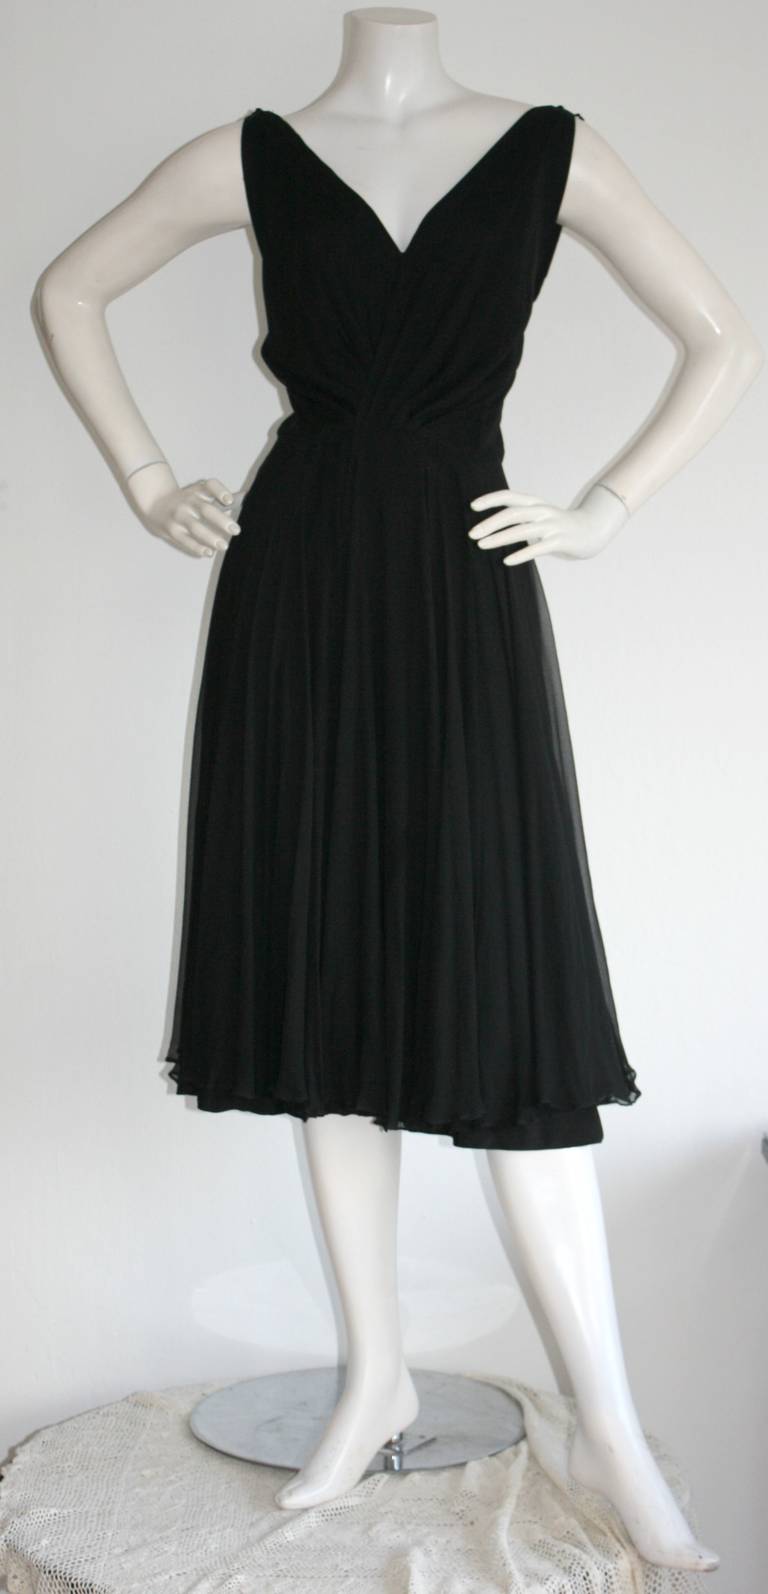 Spectacular I. Magnin 1950s Black Chiffon Dress Perfect Little Black Dress 2